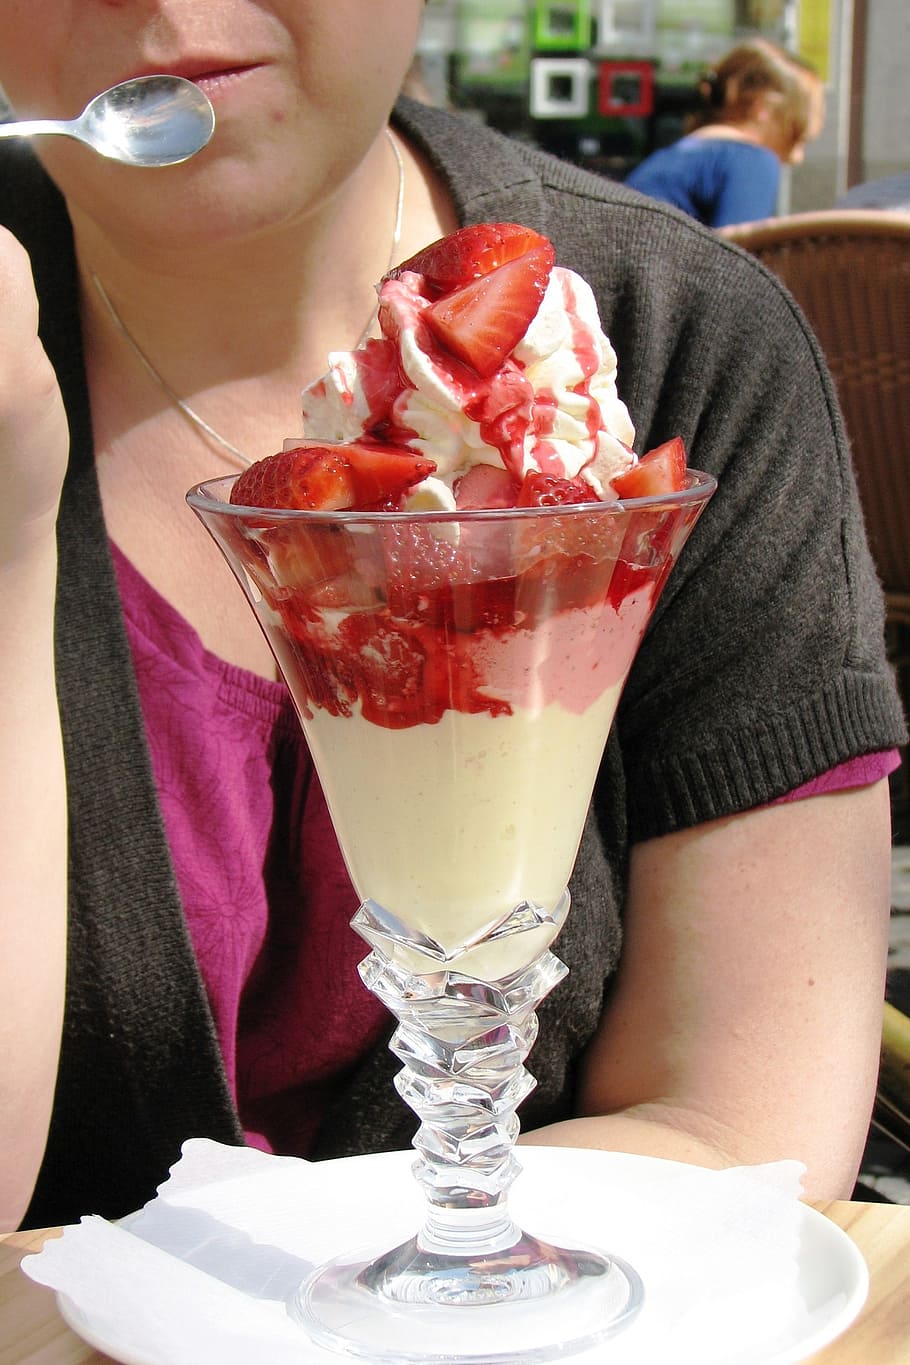 ice cream sundae, ice, delicious, strawberry, vanilla ice cream, dessert, cream, sweet, summer, ice cream parlour